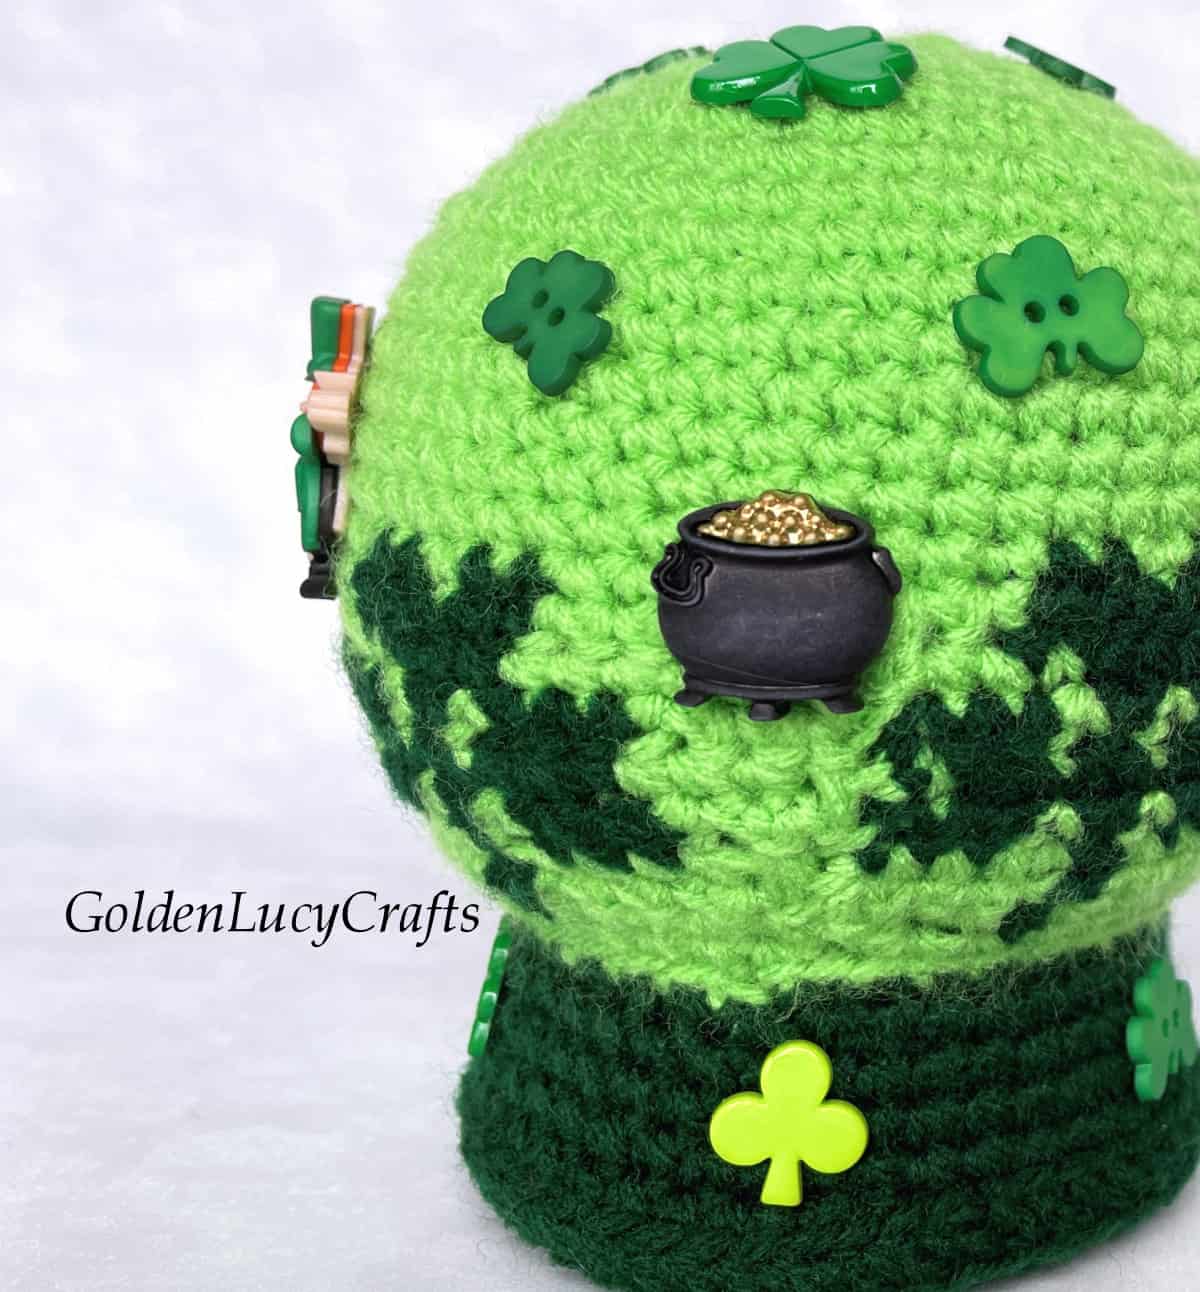 Crochet snow globe amigurumi for St. Patrick's Day close up picture.